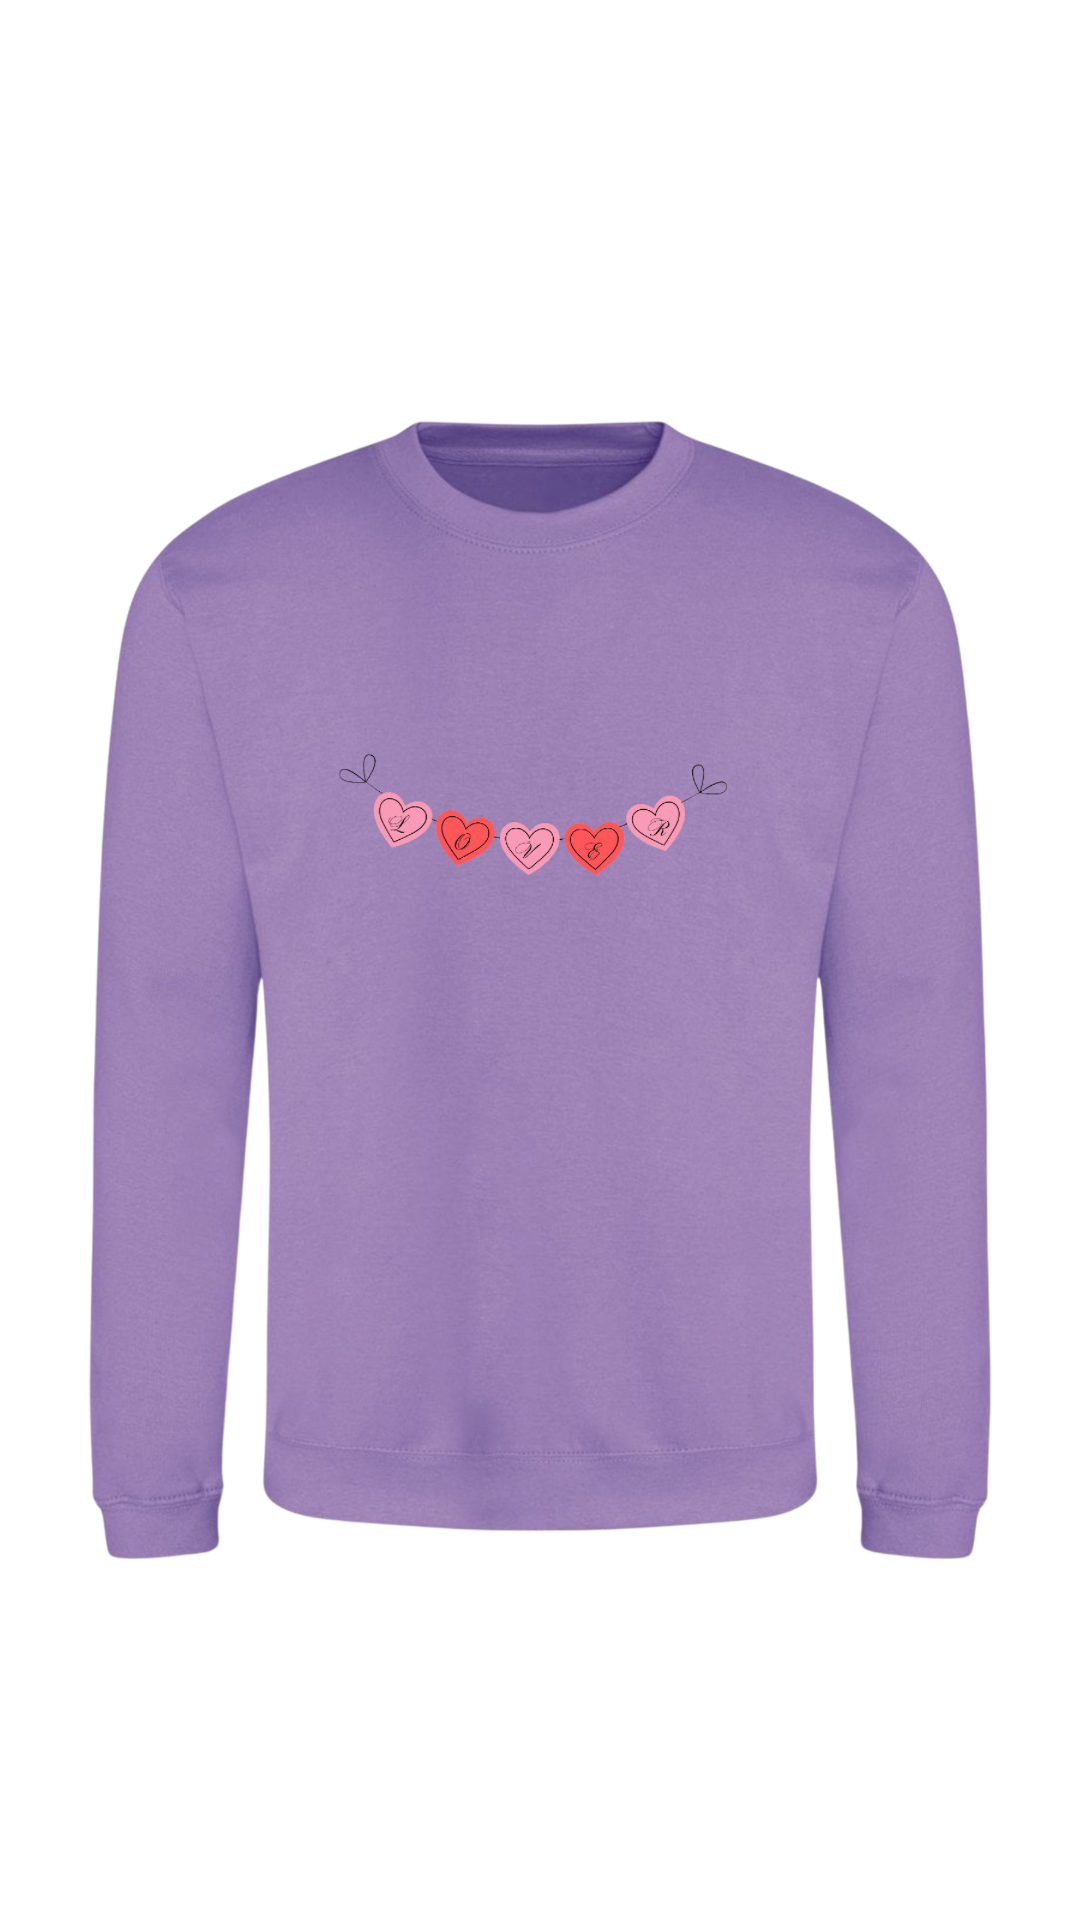 Lover discounted sweatshirt